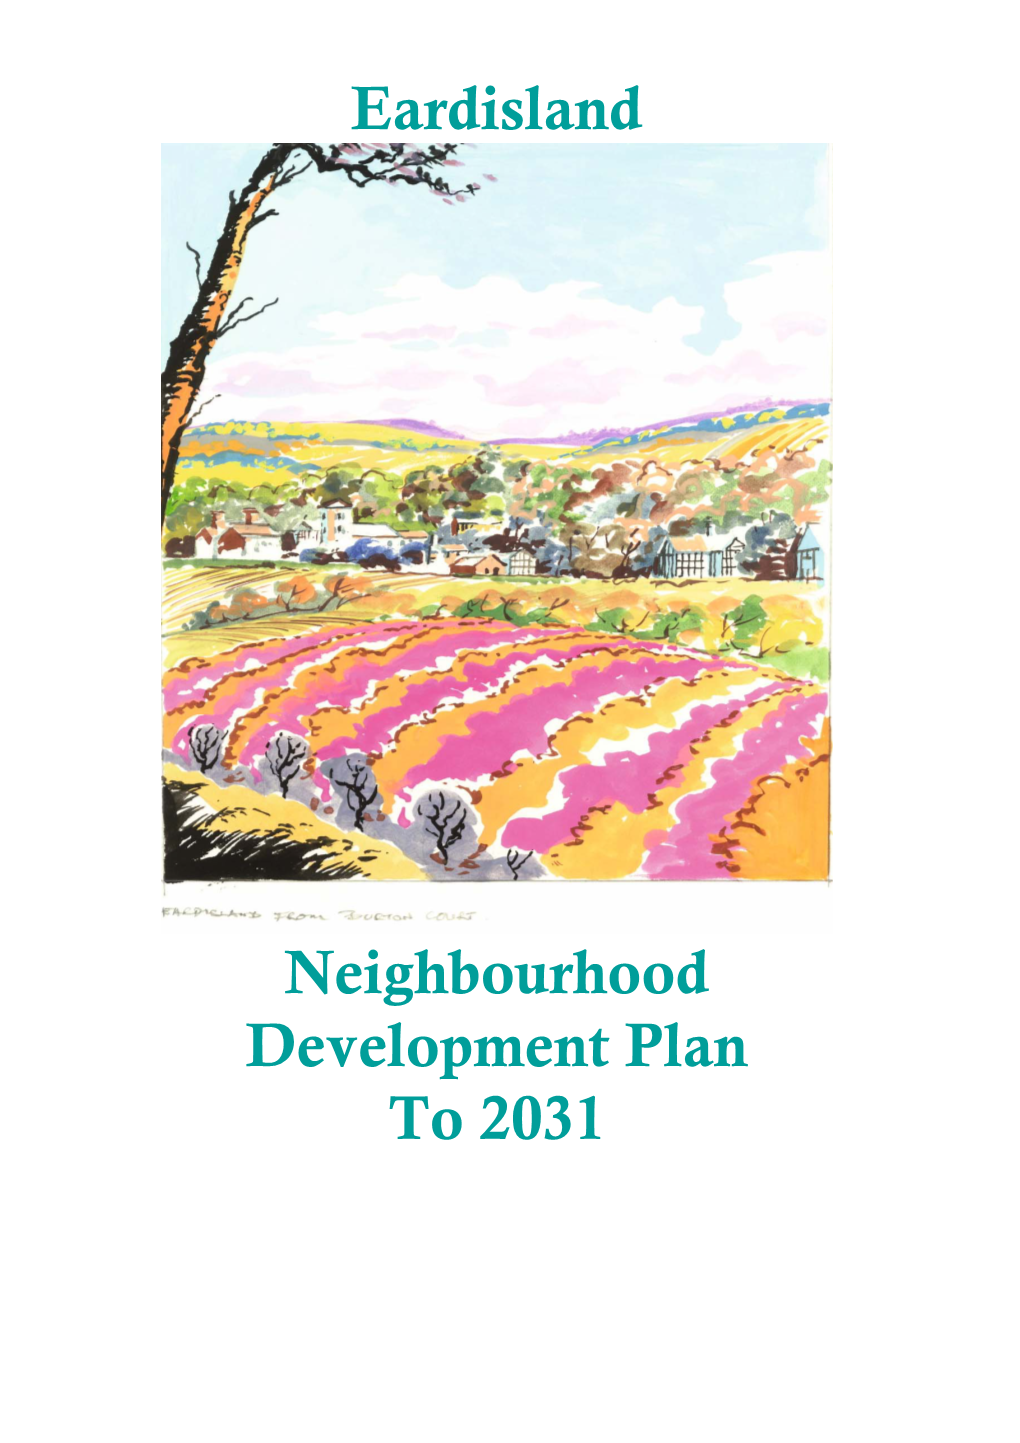 Eardisland Neighbourhood Development Plan to 2031